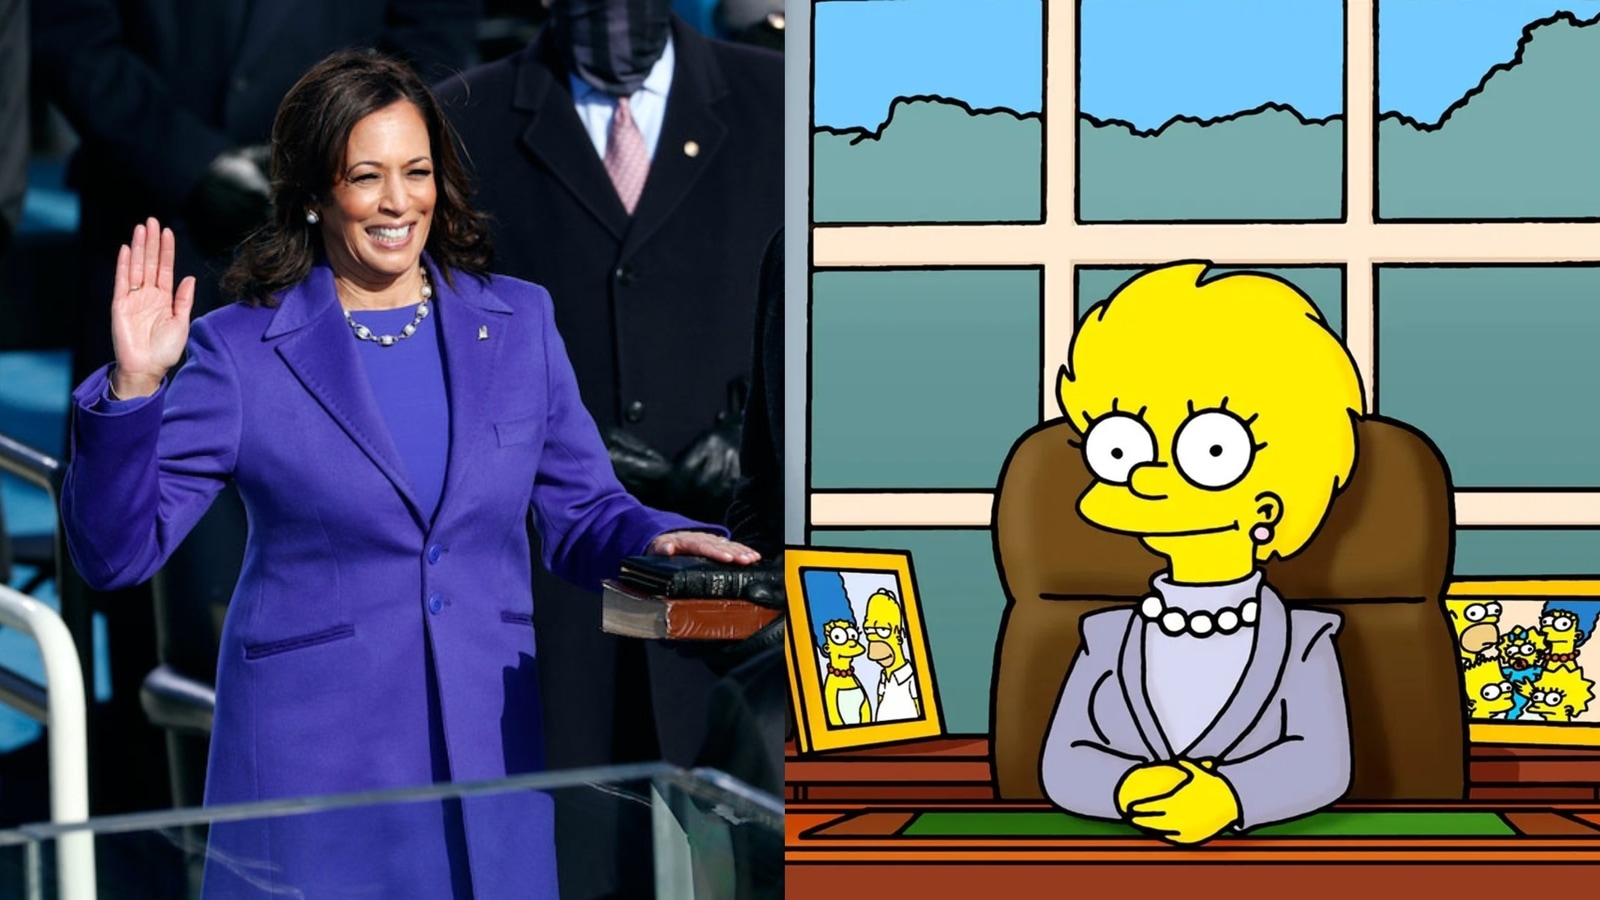 Kamala Harris for POTUS to Trump’s presidency: US election milestones predicted by The Simpsons